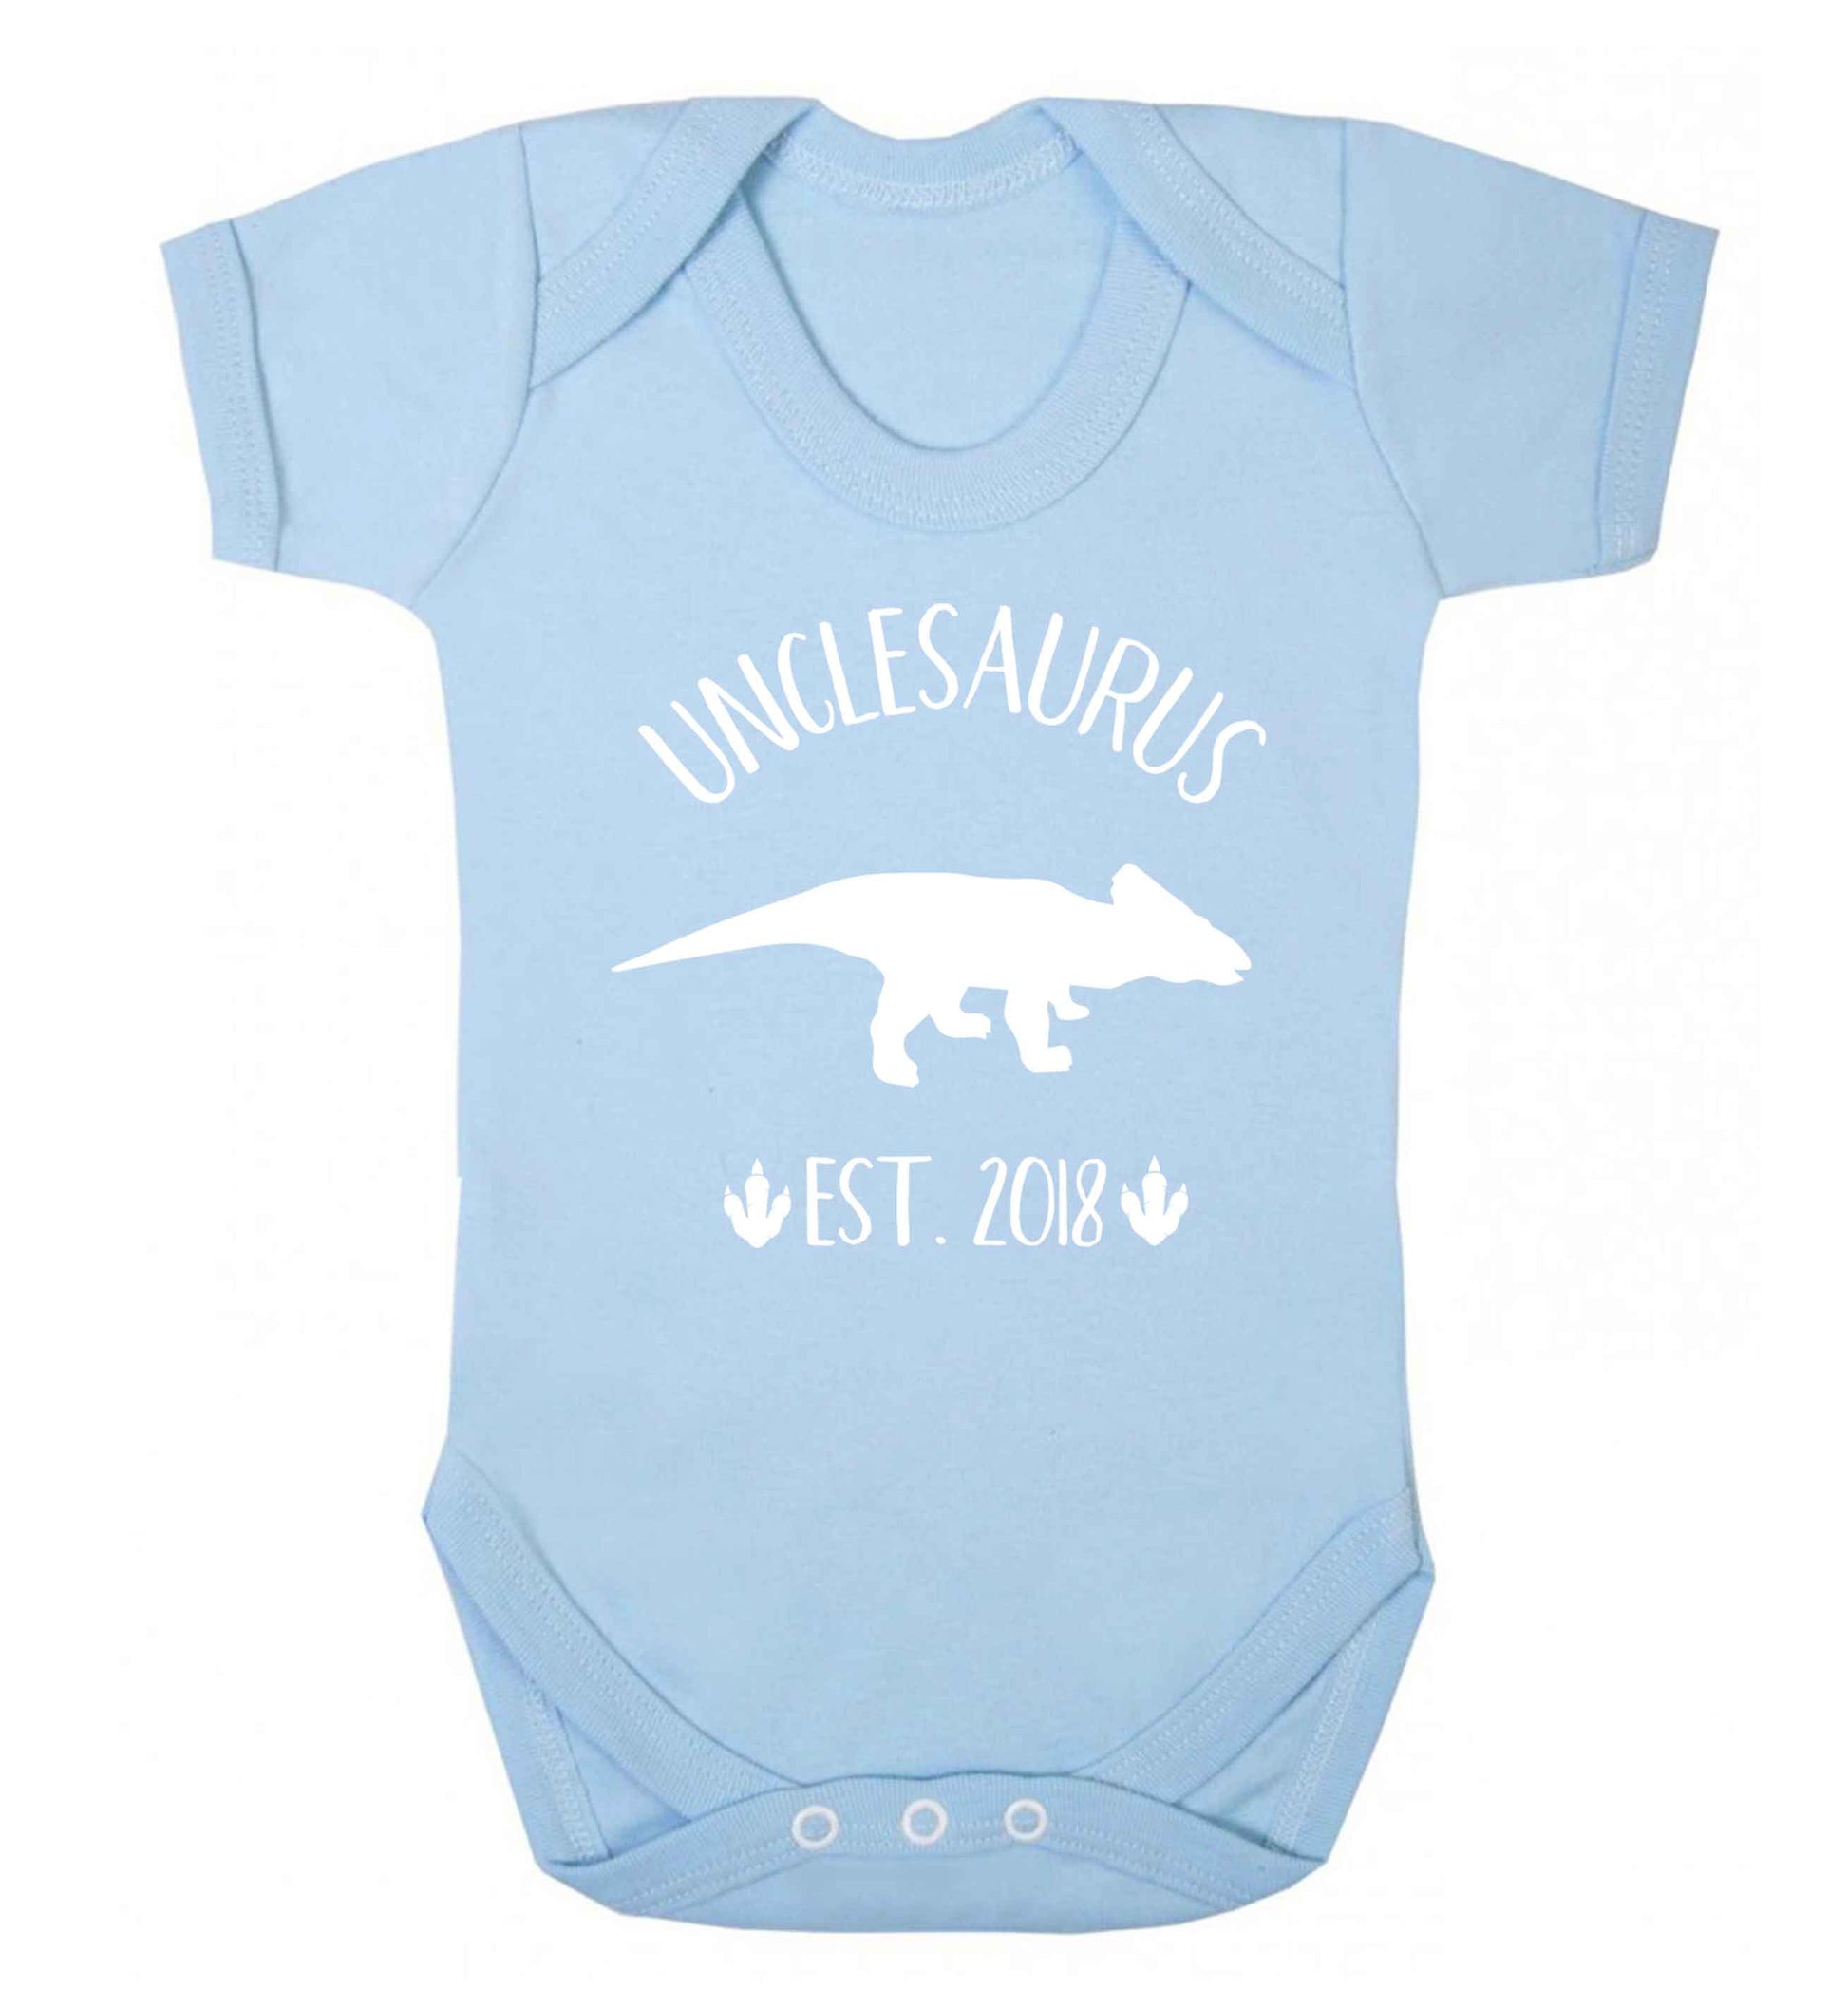 Personalised unclesaurus since (custom date) Baby Vest pale blue 18-24 months